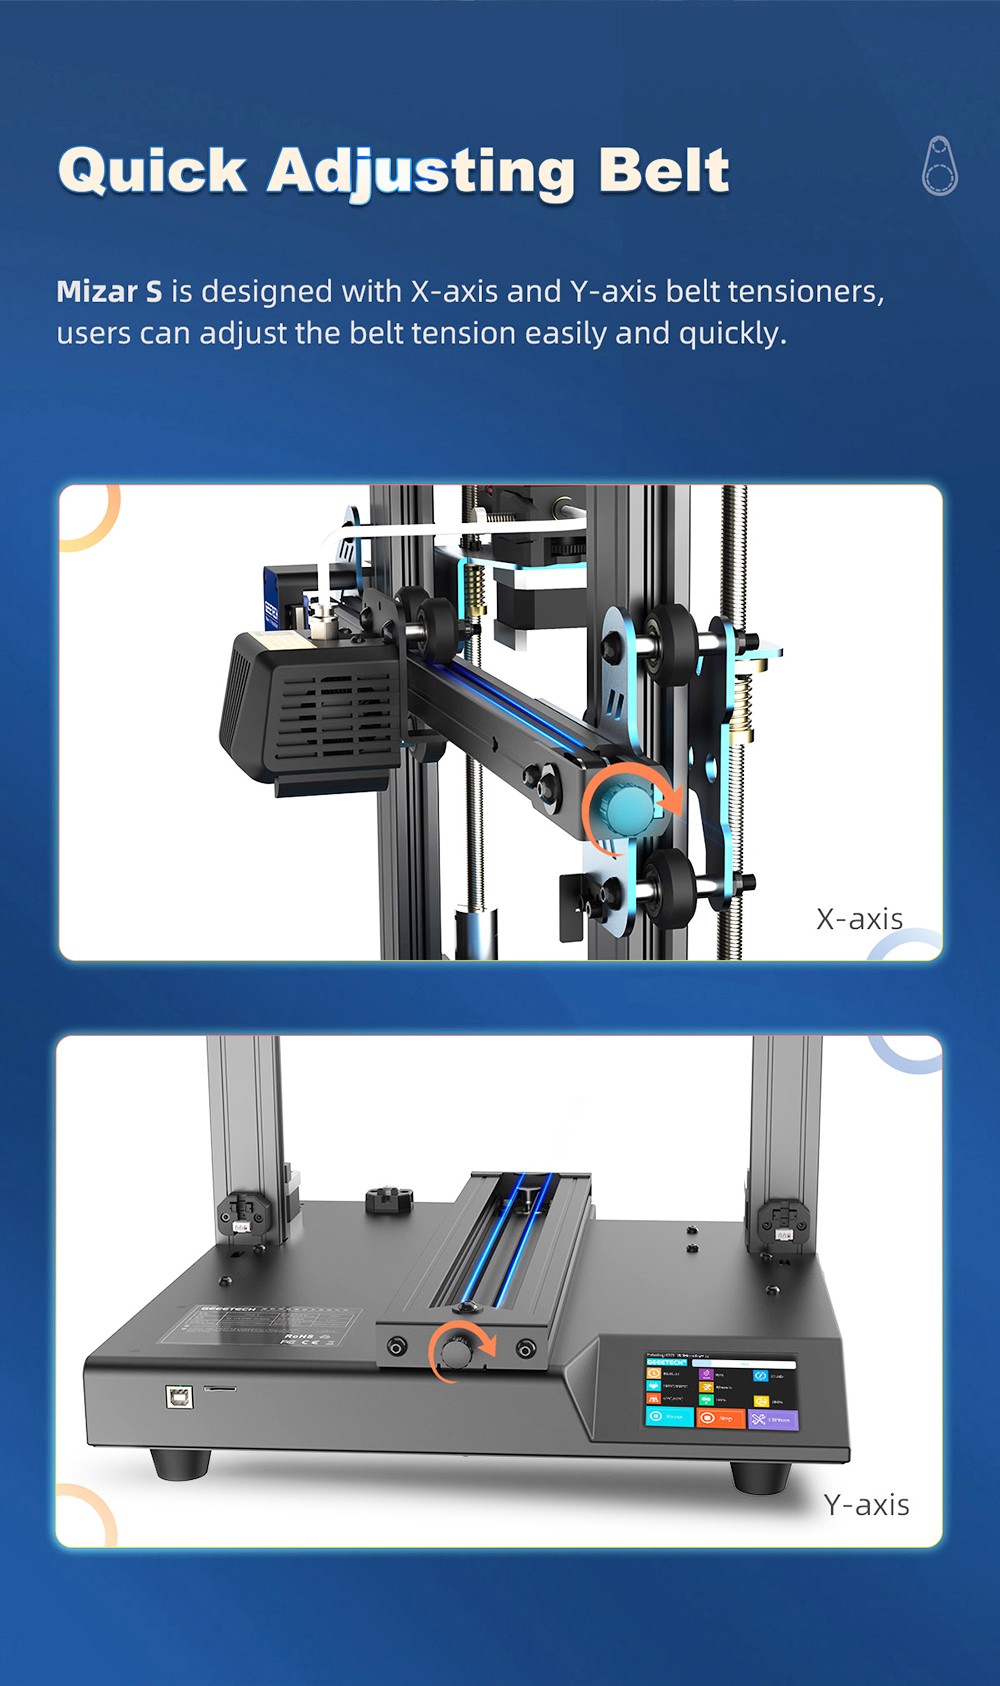 Imprimante 3D Geeetech Mizar S